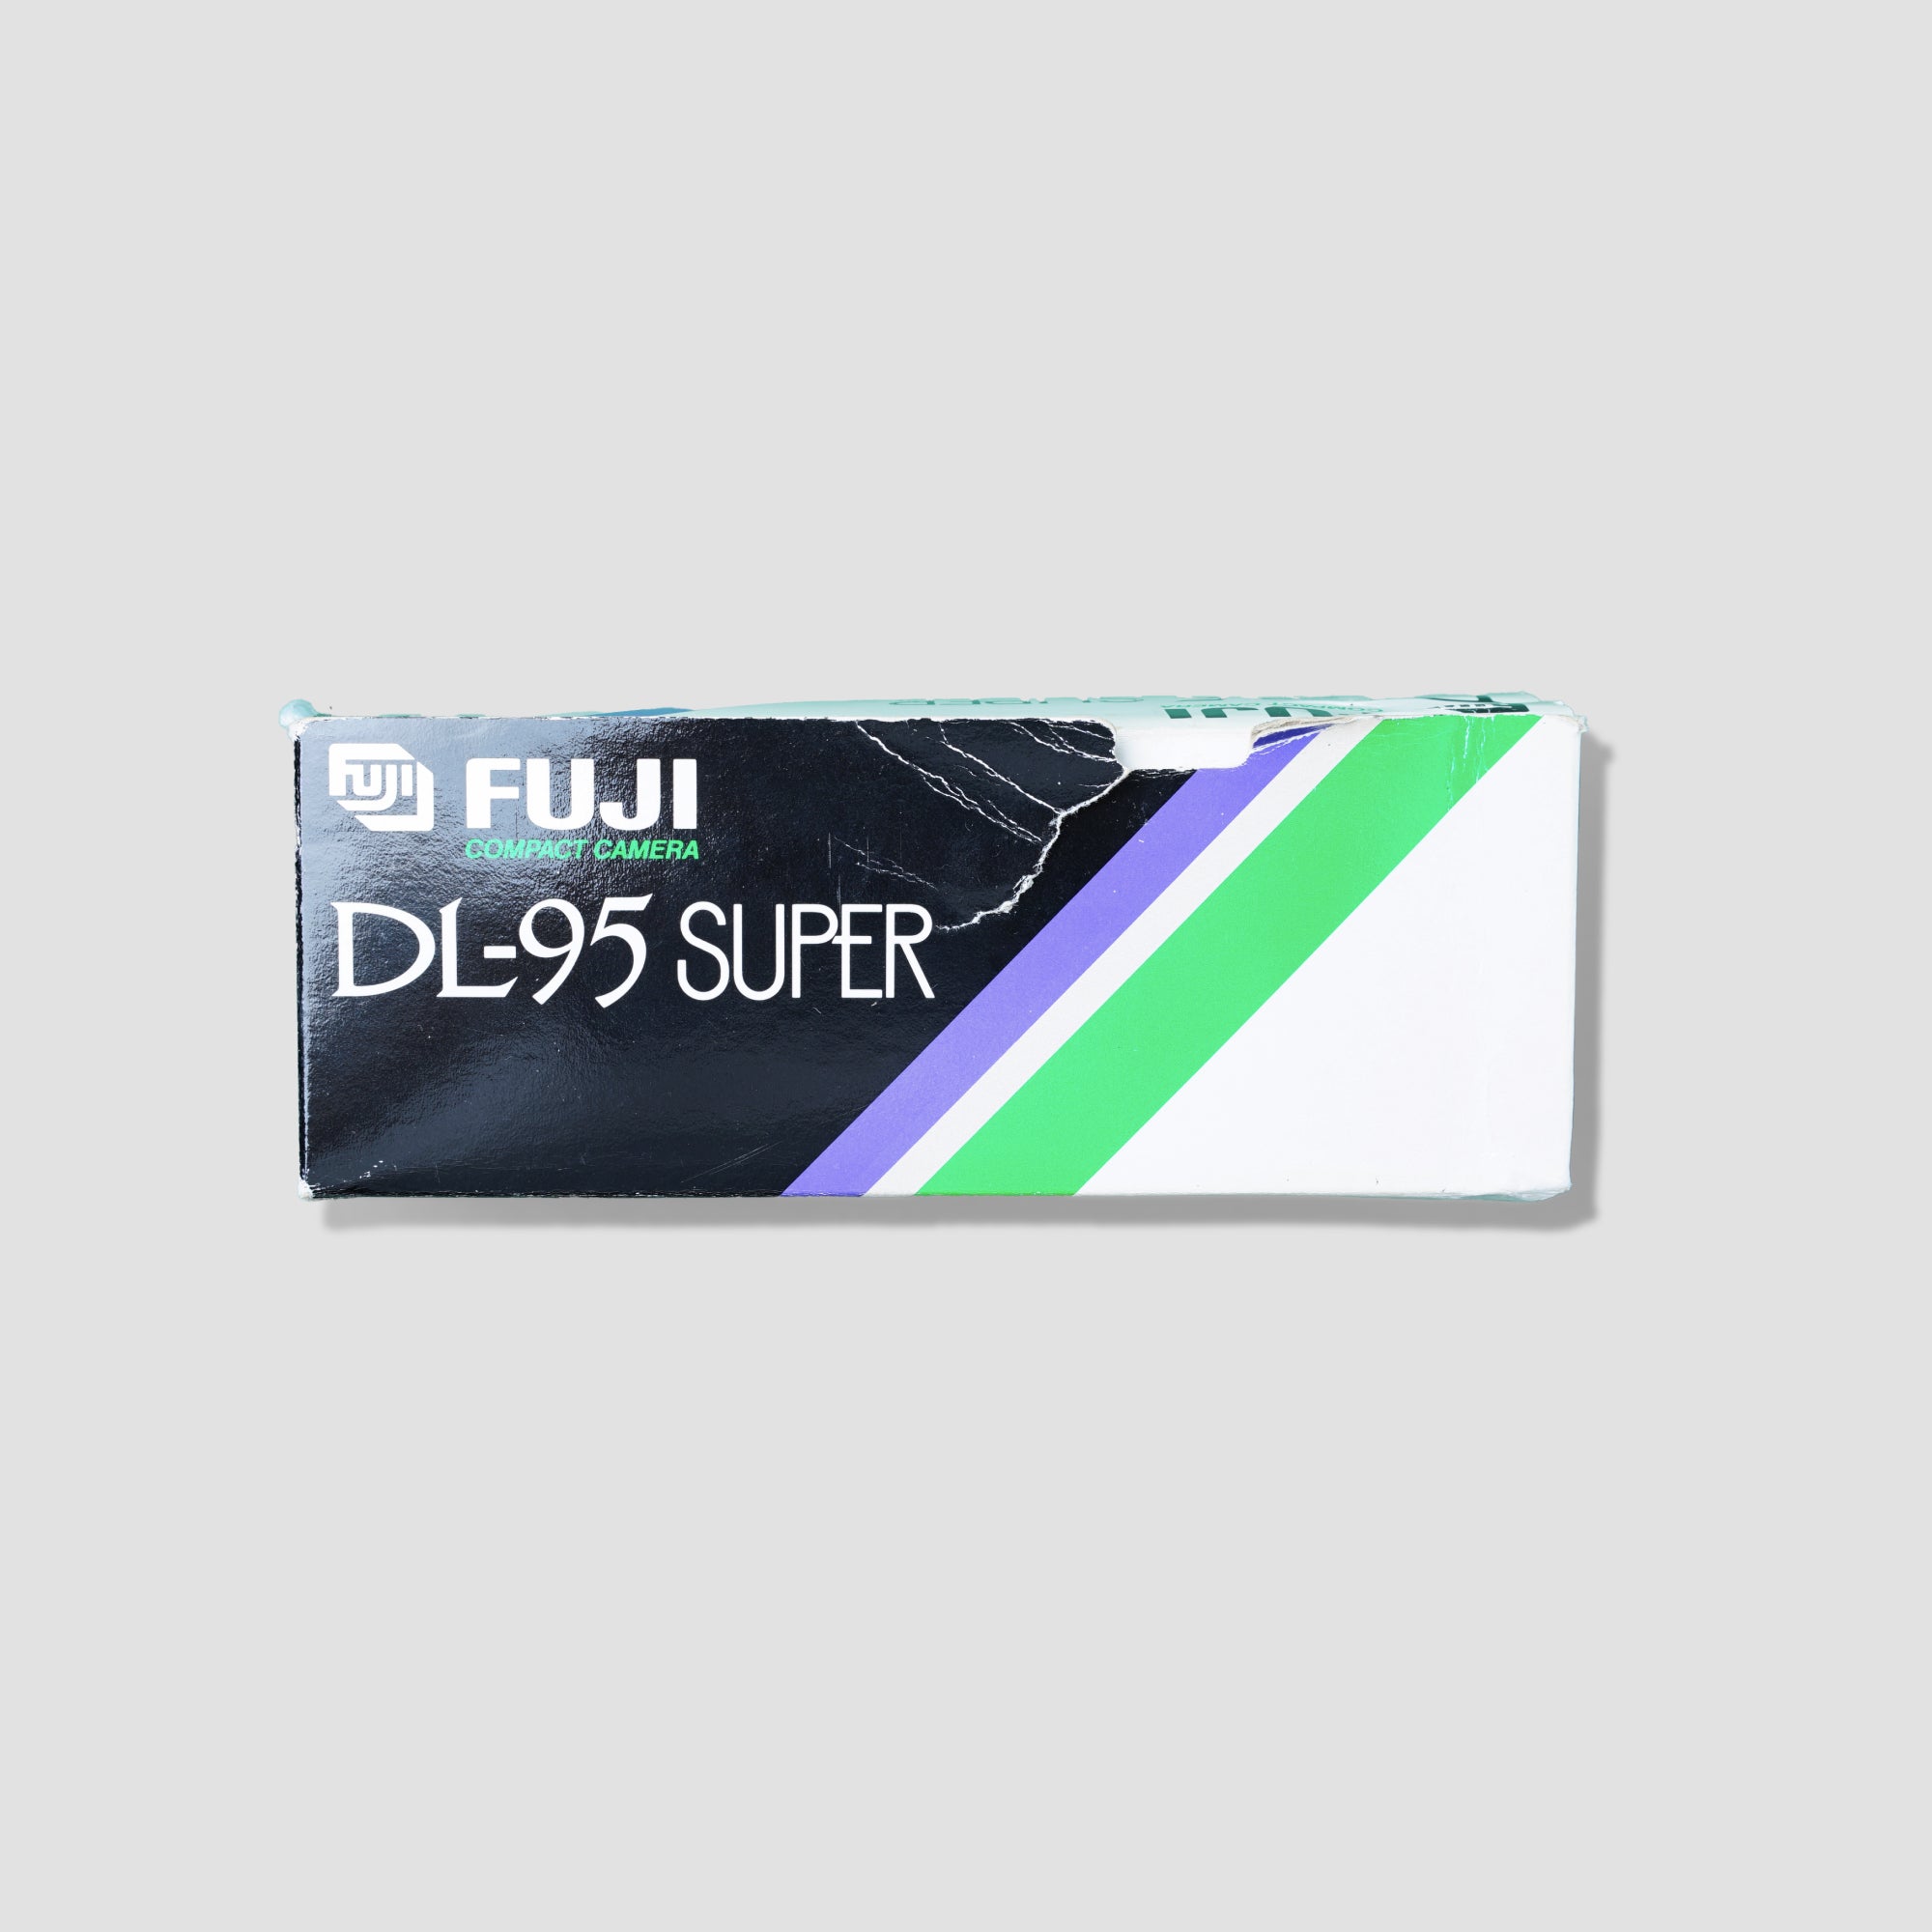 Buy Fuji DL-95 Super now at Analogue Amsterdam